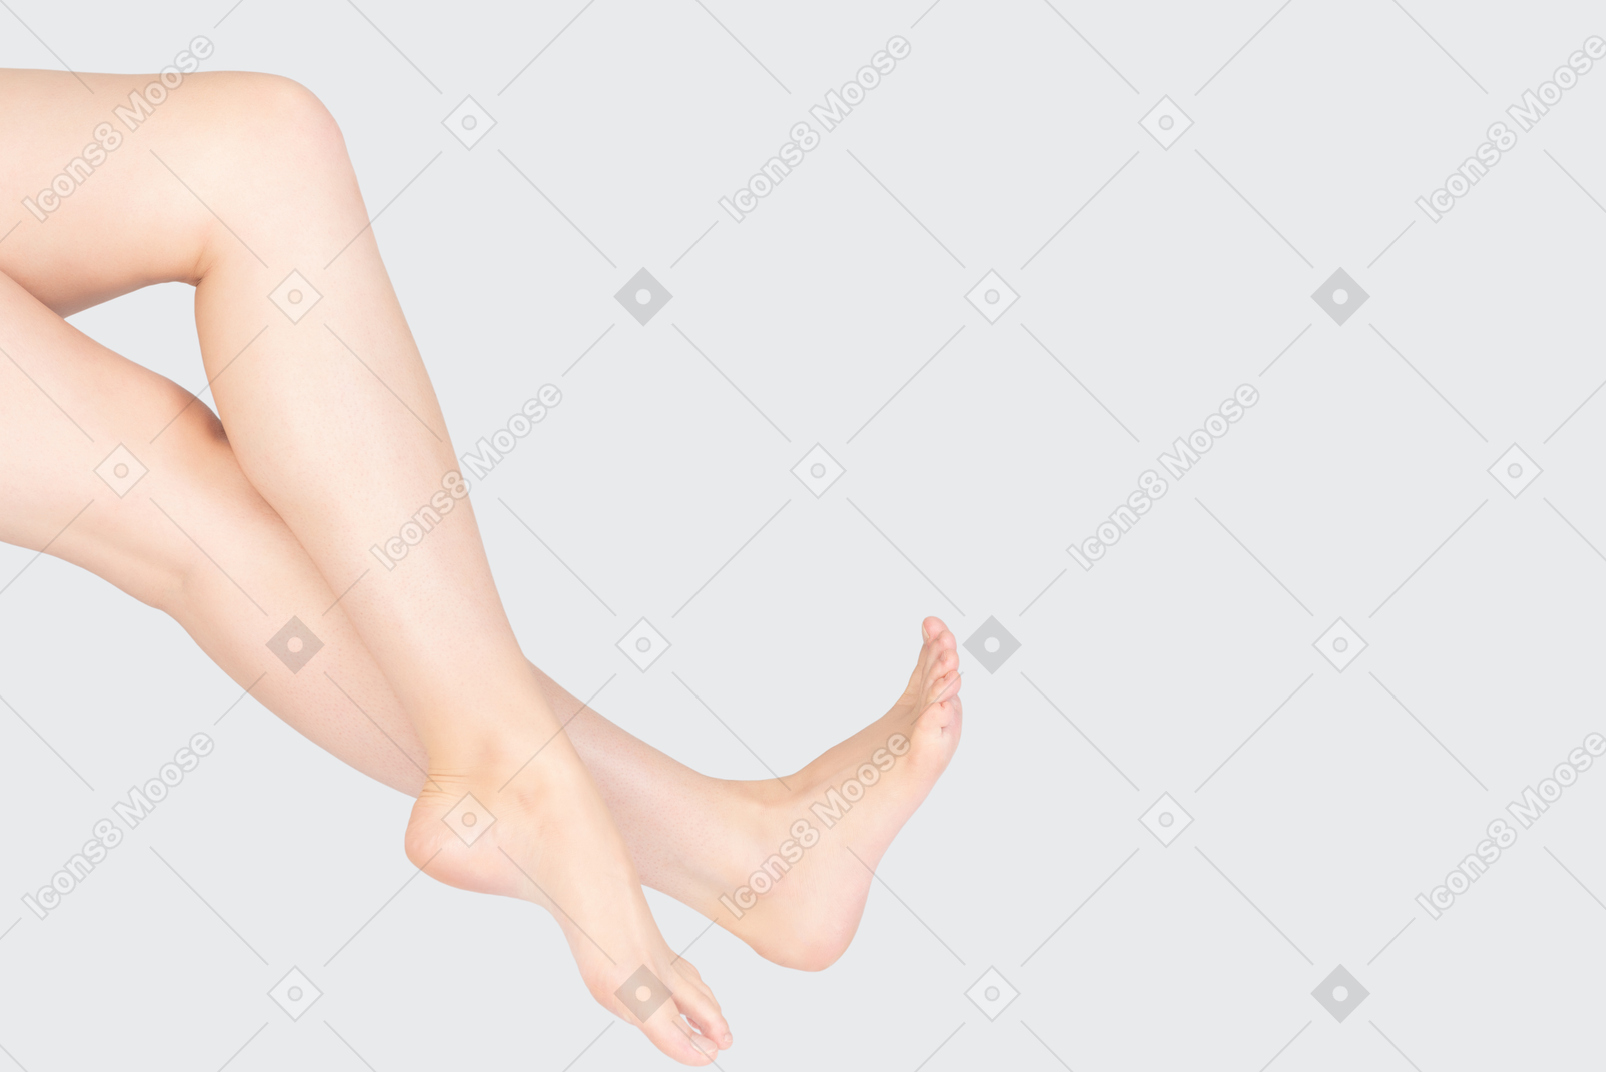 Shot of crossed female legs